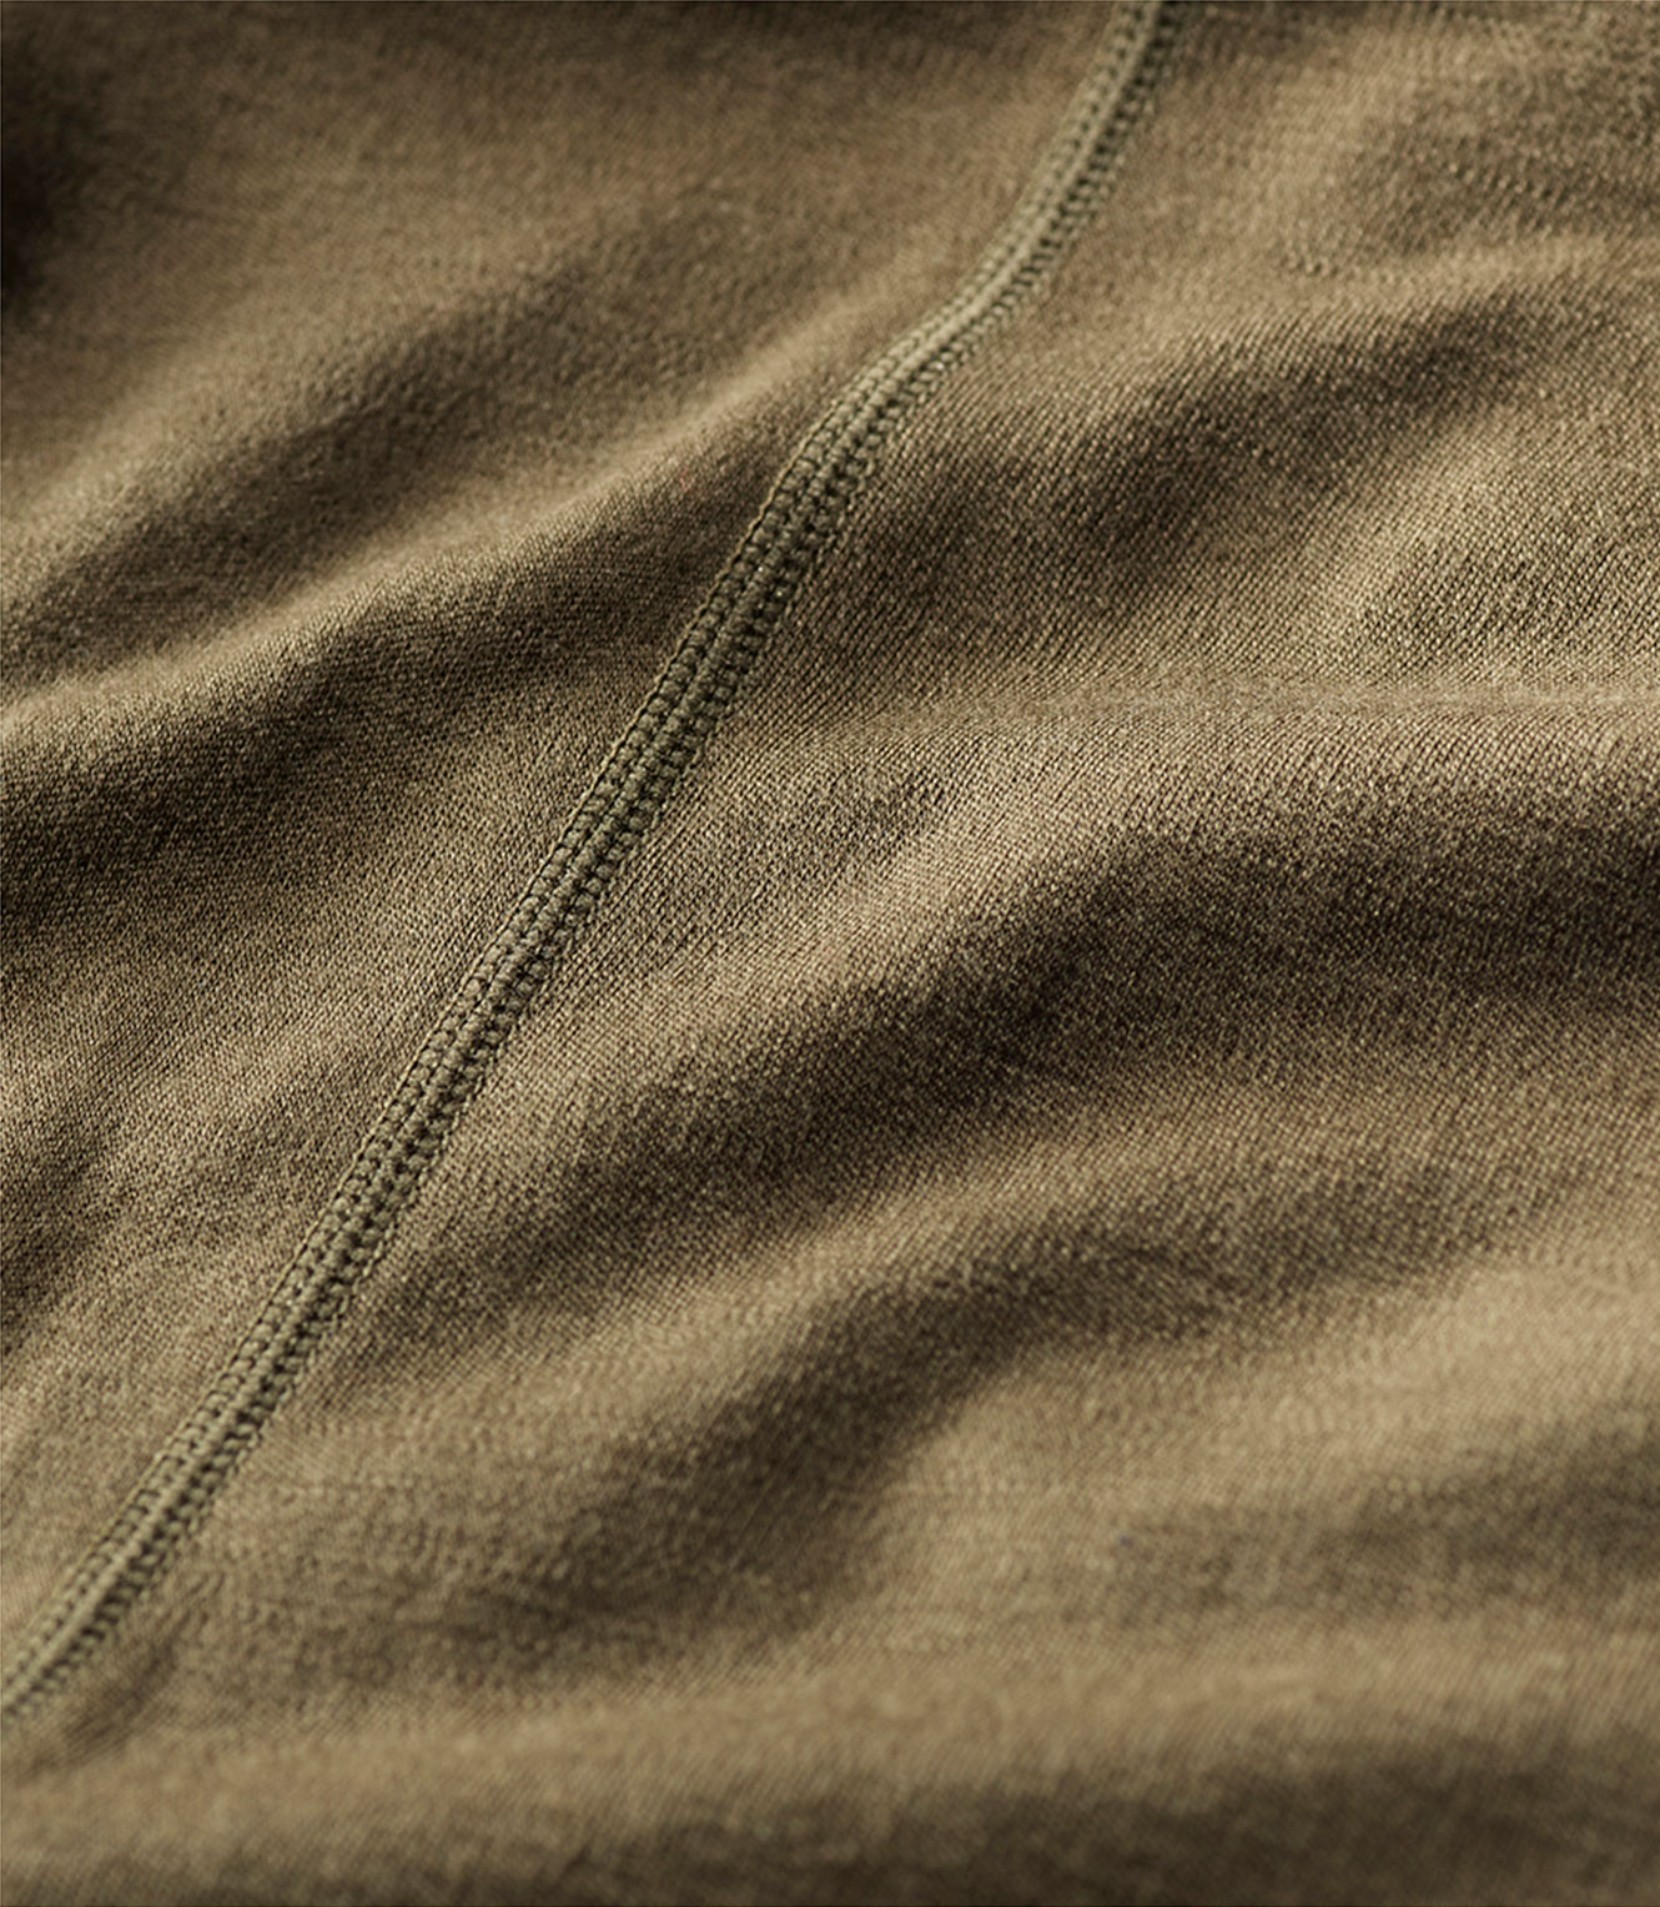 Image of woll fabric